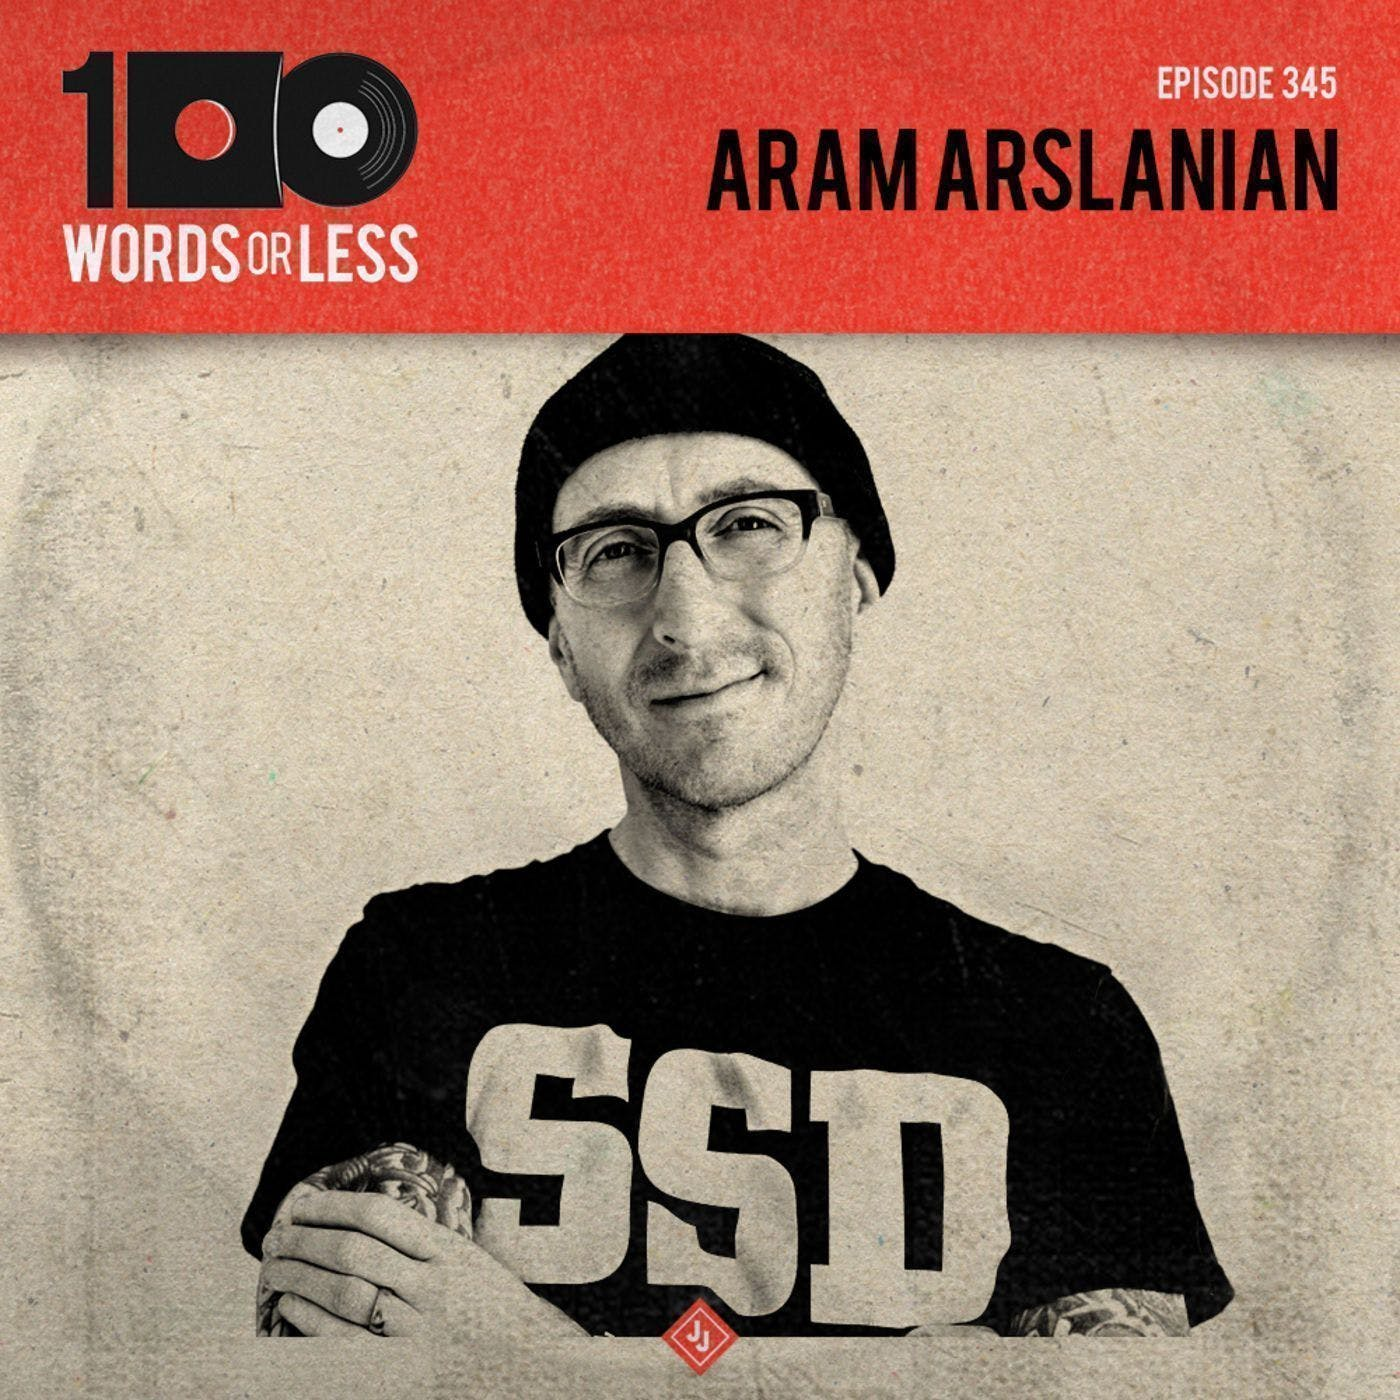 Aram Arslanian